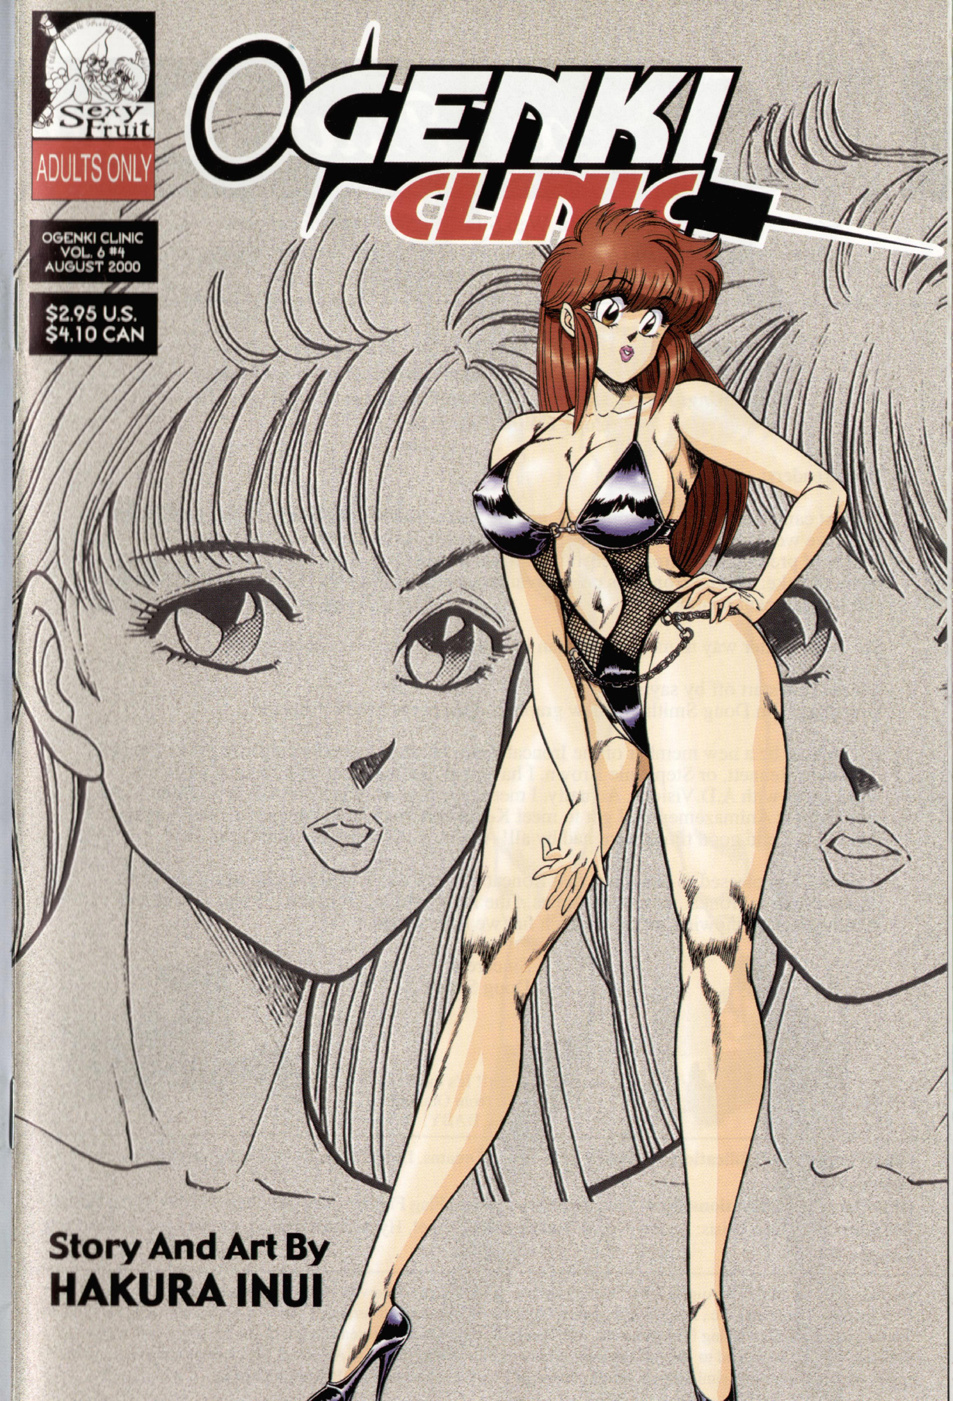 Ogenki Clinic Vol.6 89 hentai manga